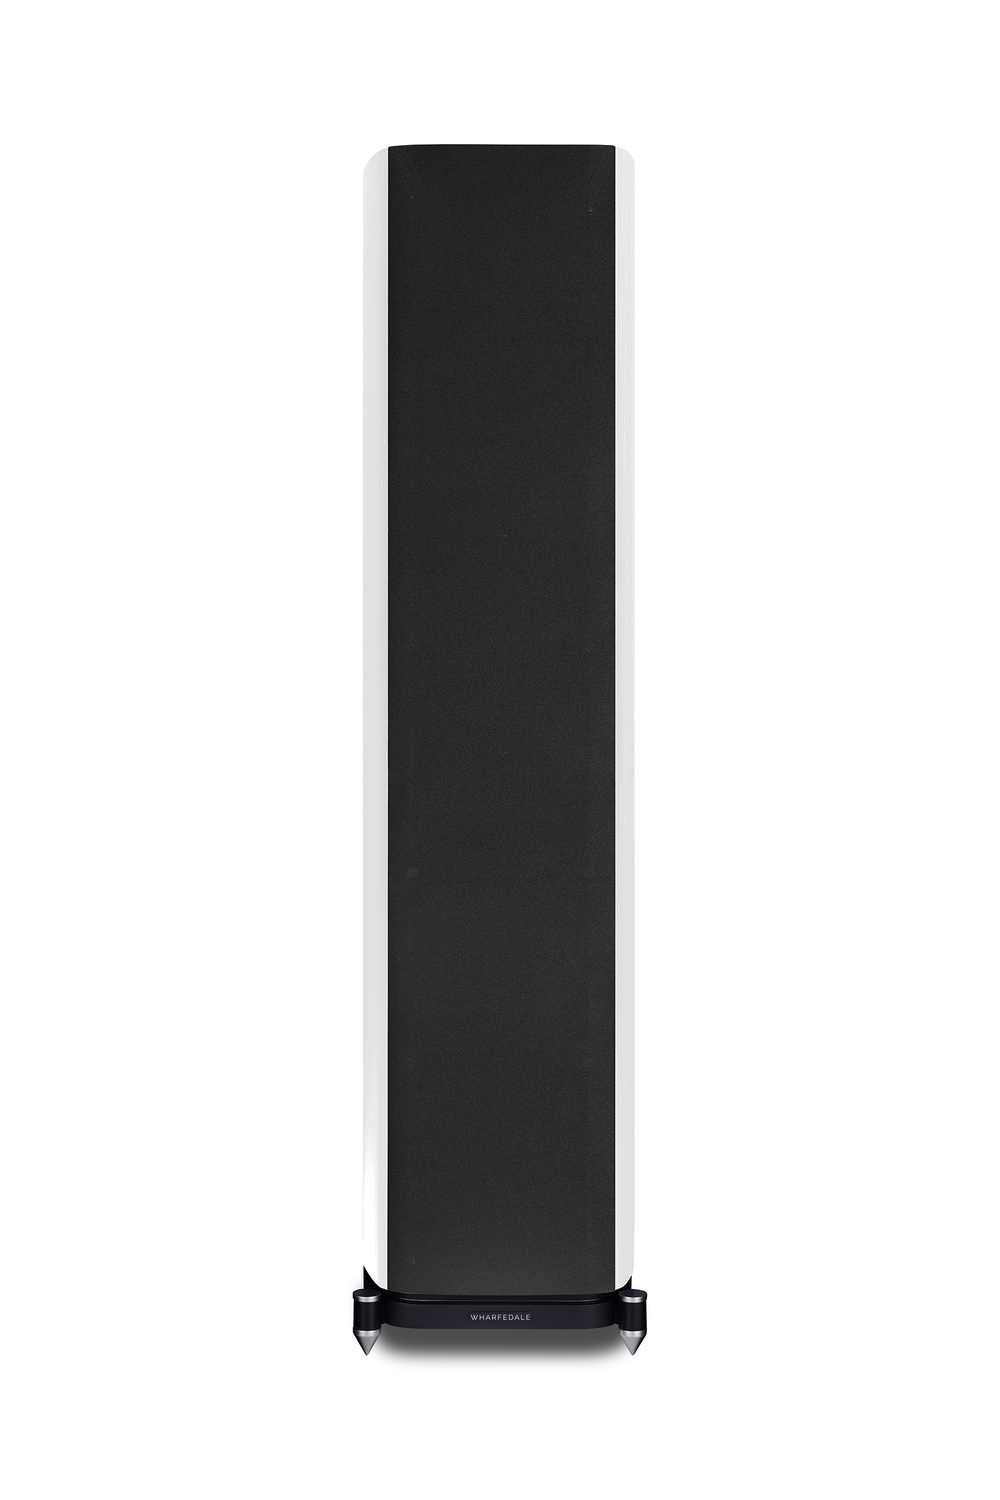 [B-Stock] EVO4.4 Floorstanding Speakers (Pair)